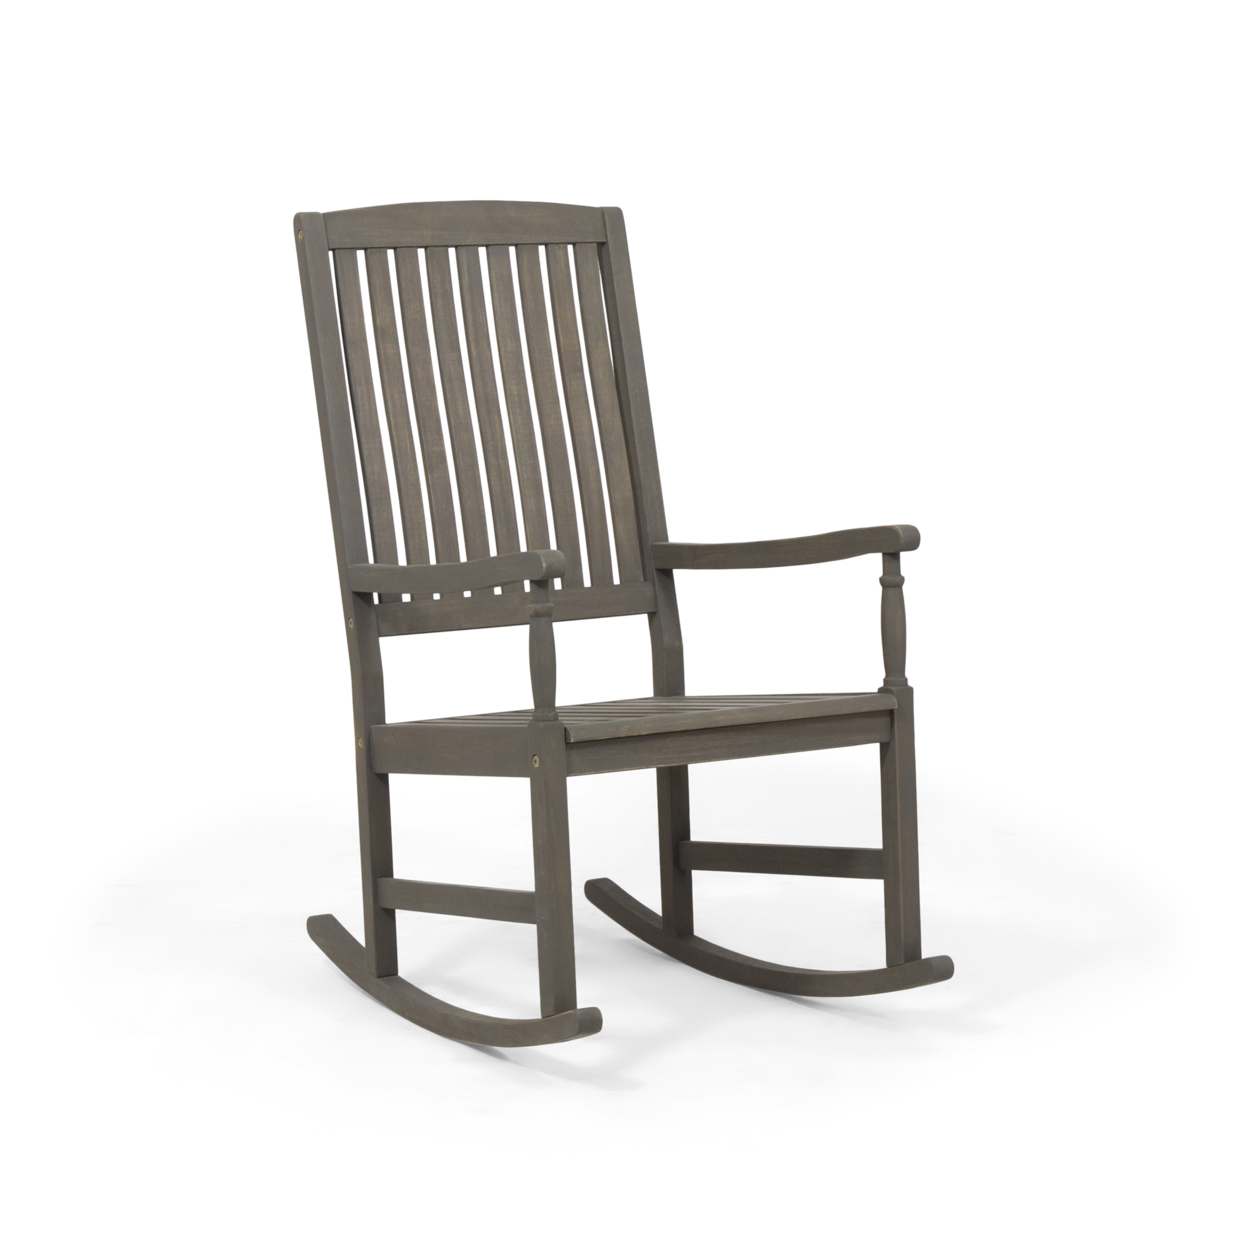 Myrna Outdoor Acacia Wood Rocking Chair - Gray Finish